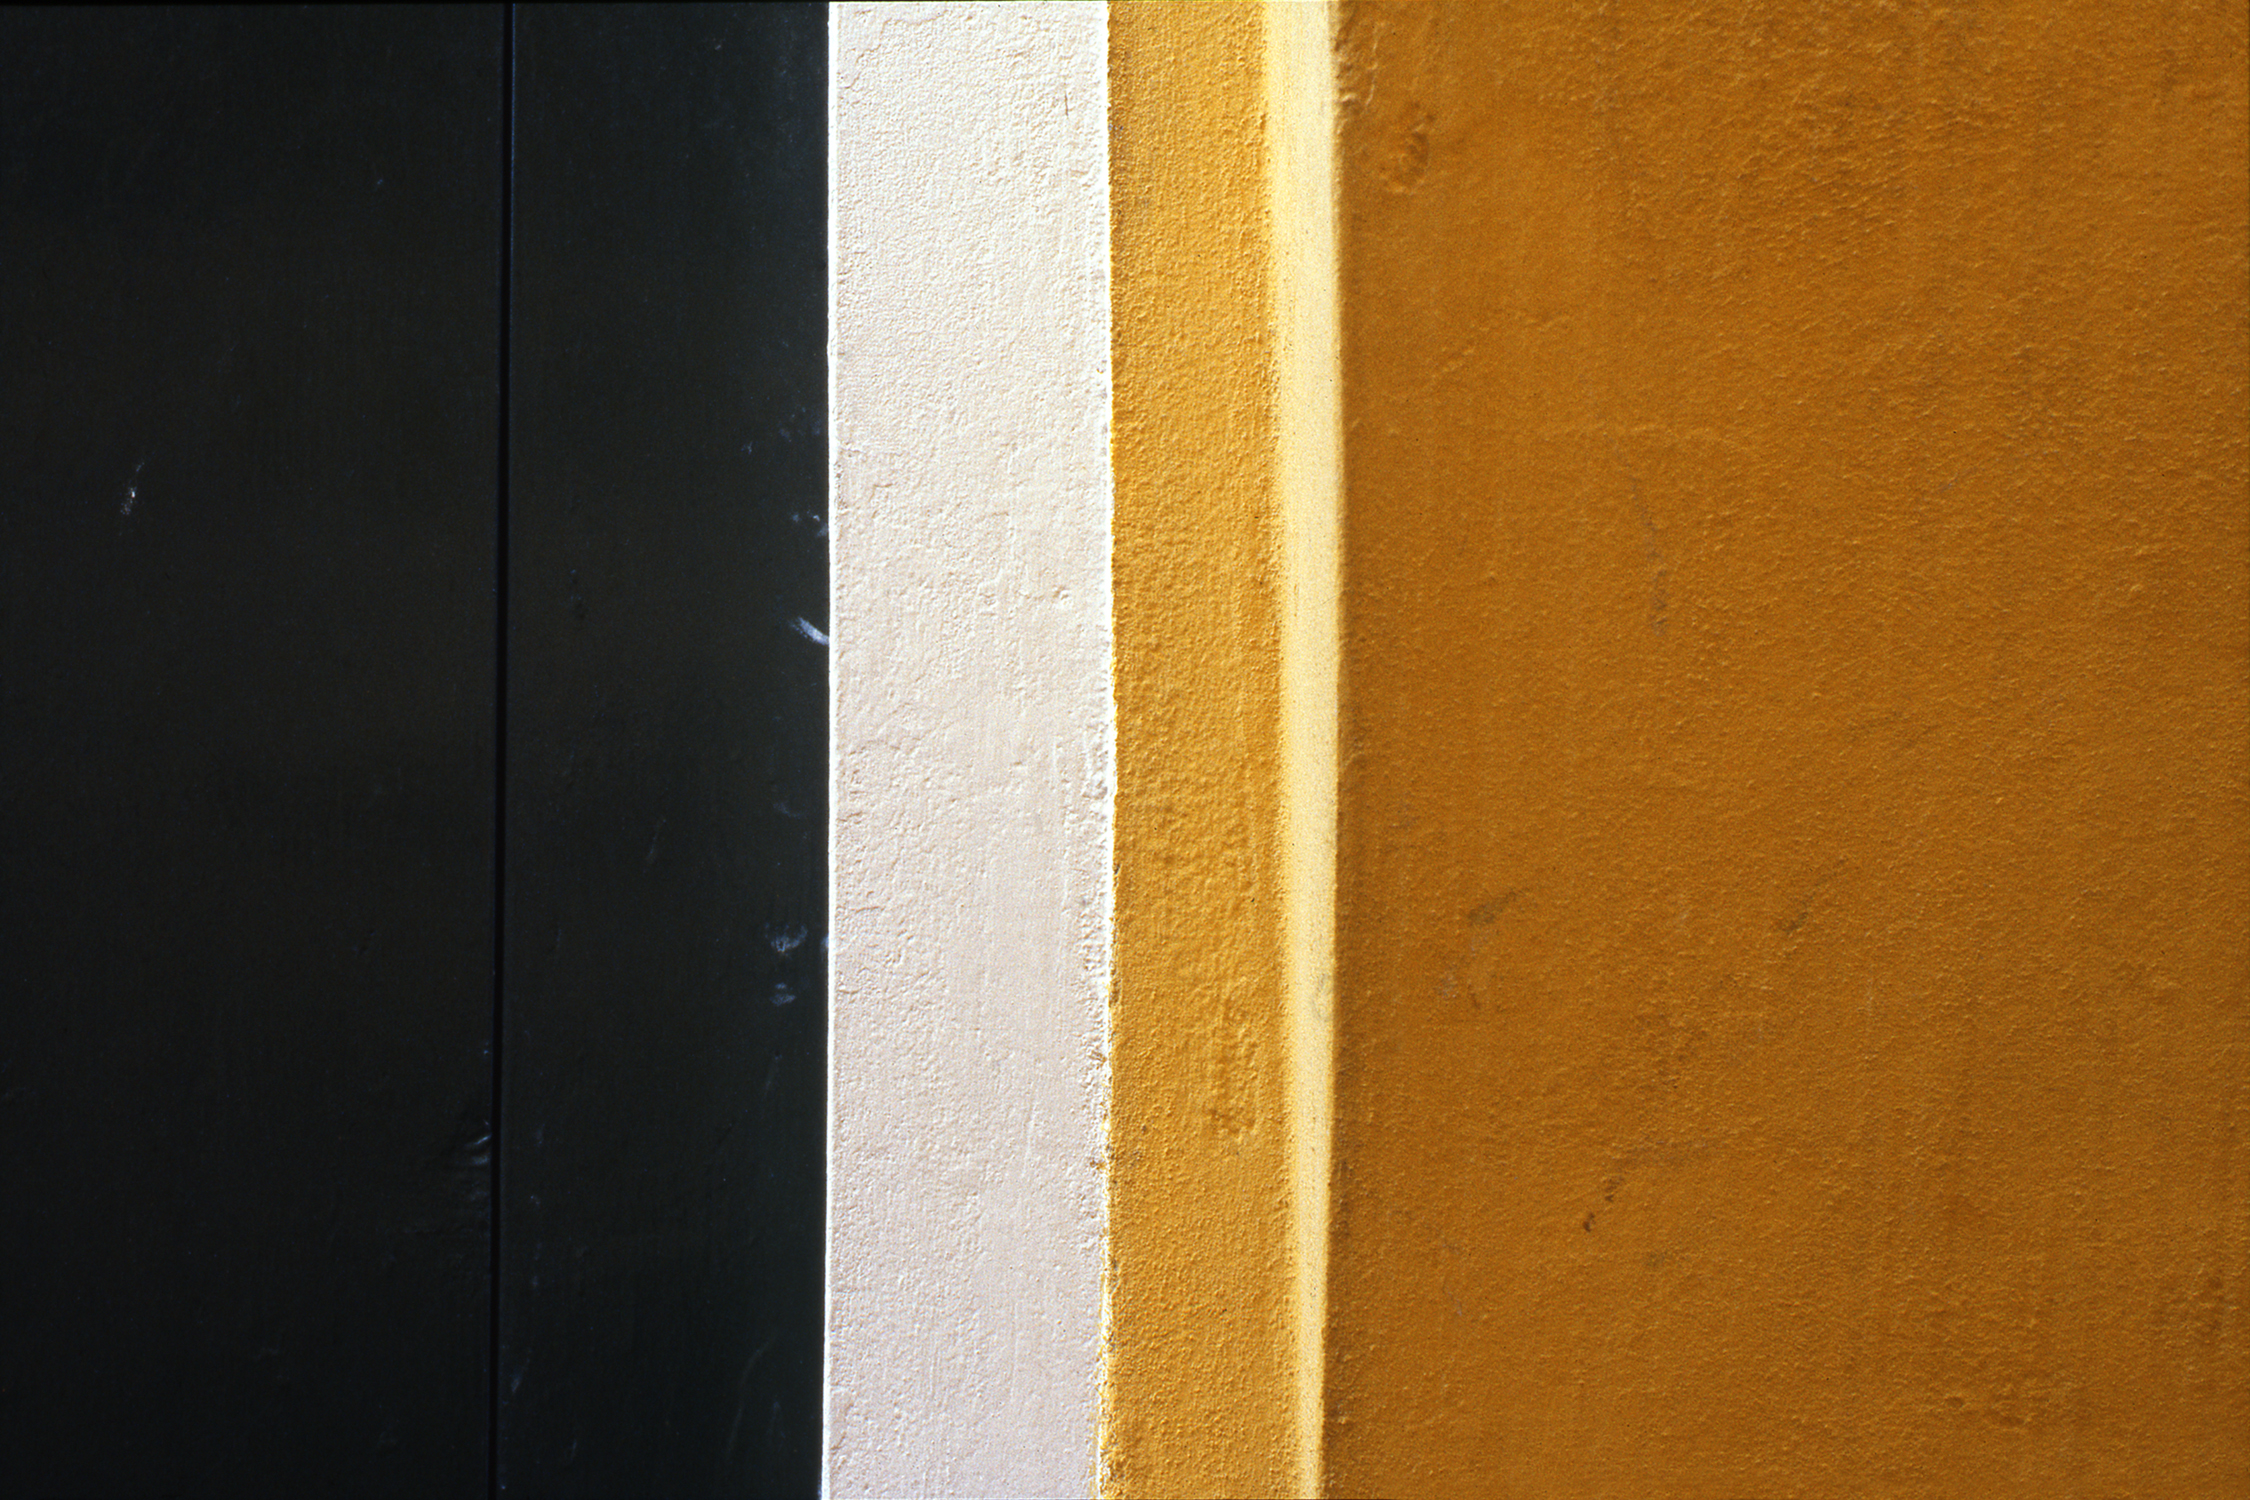   Yellow Wall and Green Shutter, Burano Italy, 1978 ,&nbsp;Cibachrome Print, 16 x 24cm, Edition of 10.&nbsp;&nbsp; &nbsp; &nbsp; &nbsp; &nbsp; &nbsp; &nbsp; &nbsp; &nbsp; &nbsp; &nbsp; &nbsp; &nbsp;  Exhibition:  Burano Colour Works ,&nbsp;Australian